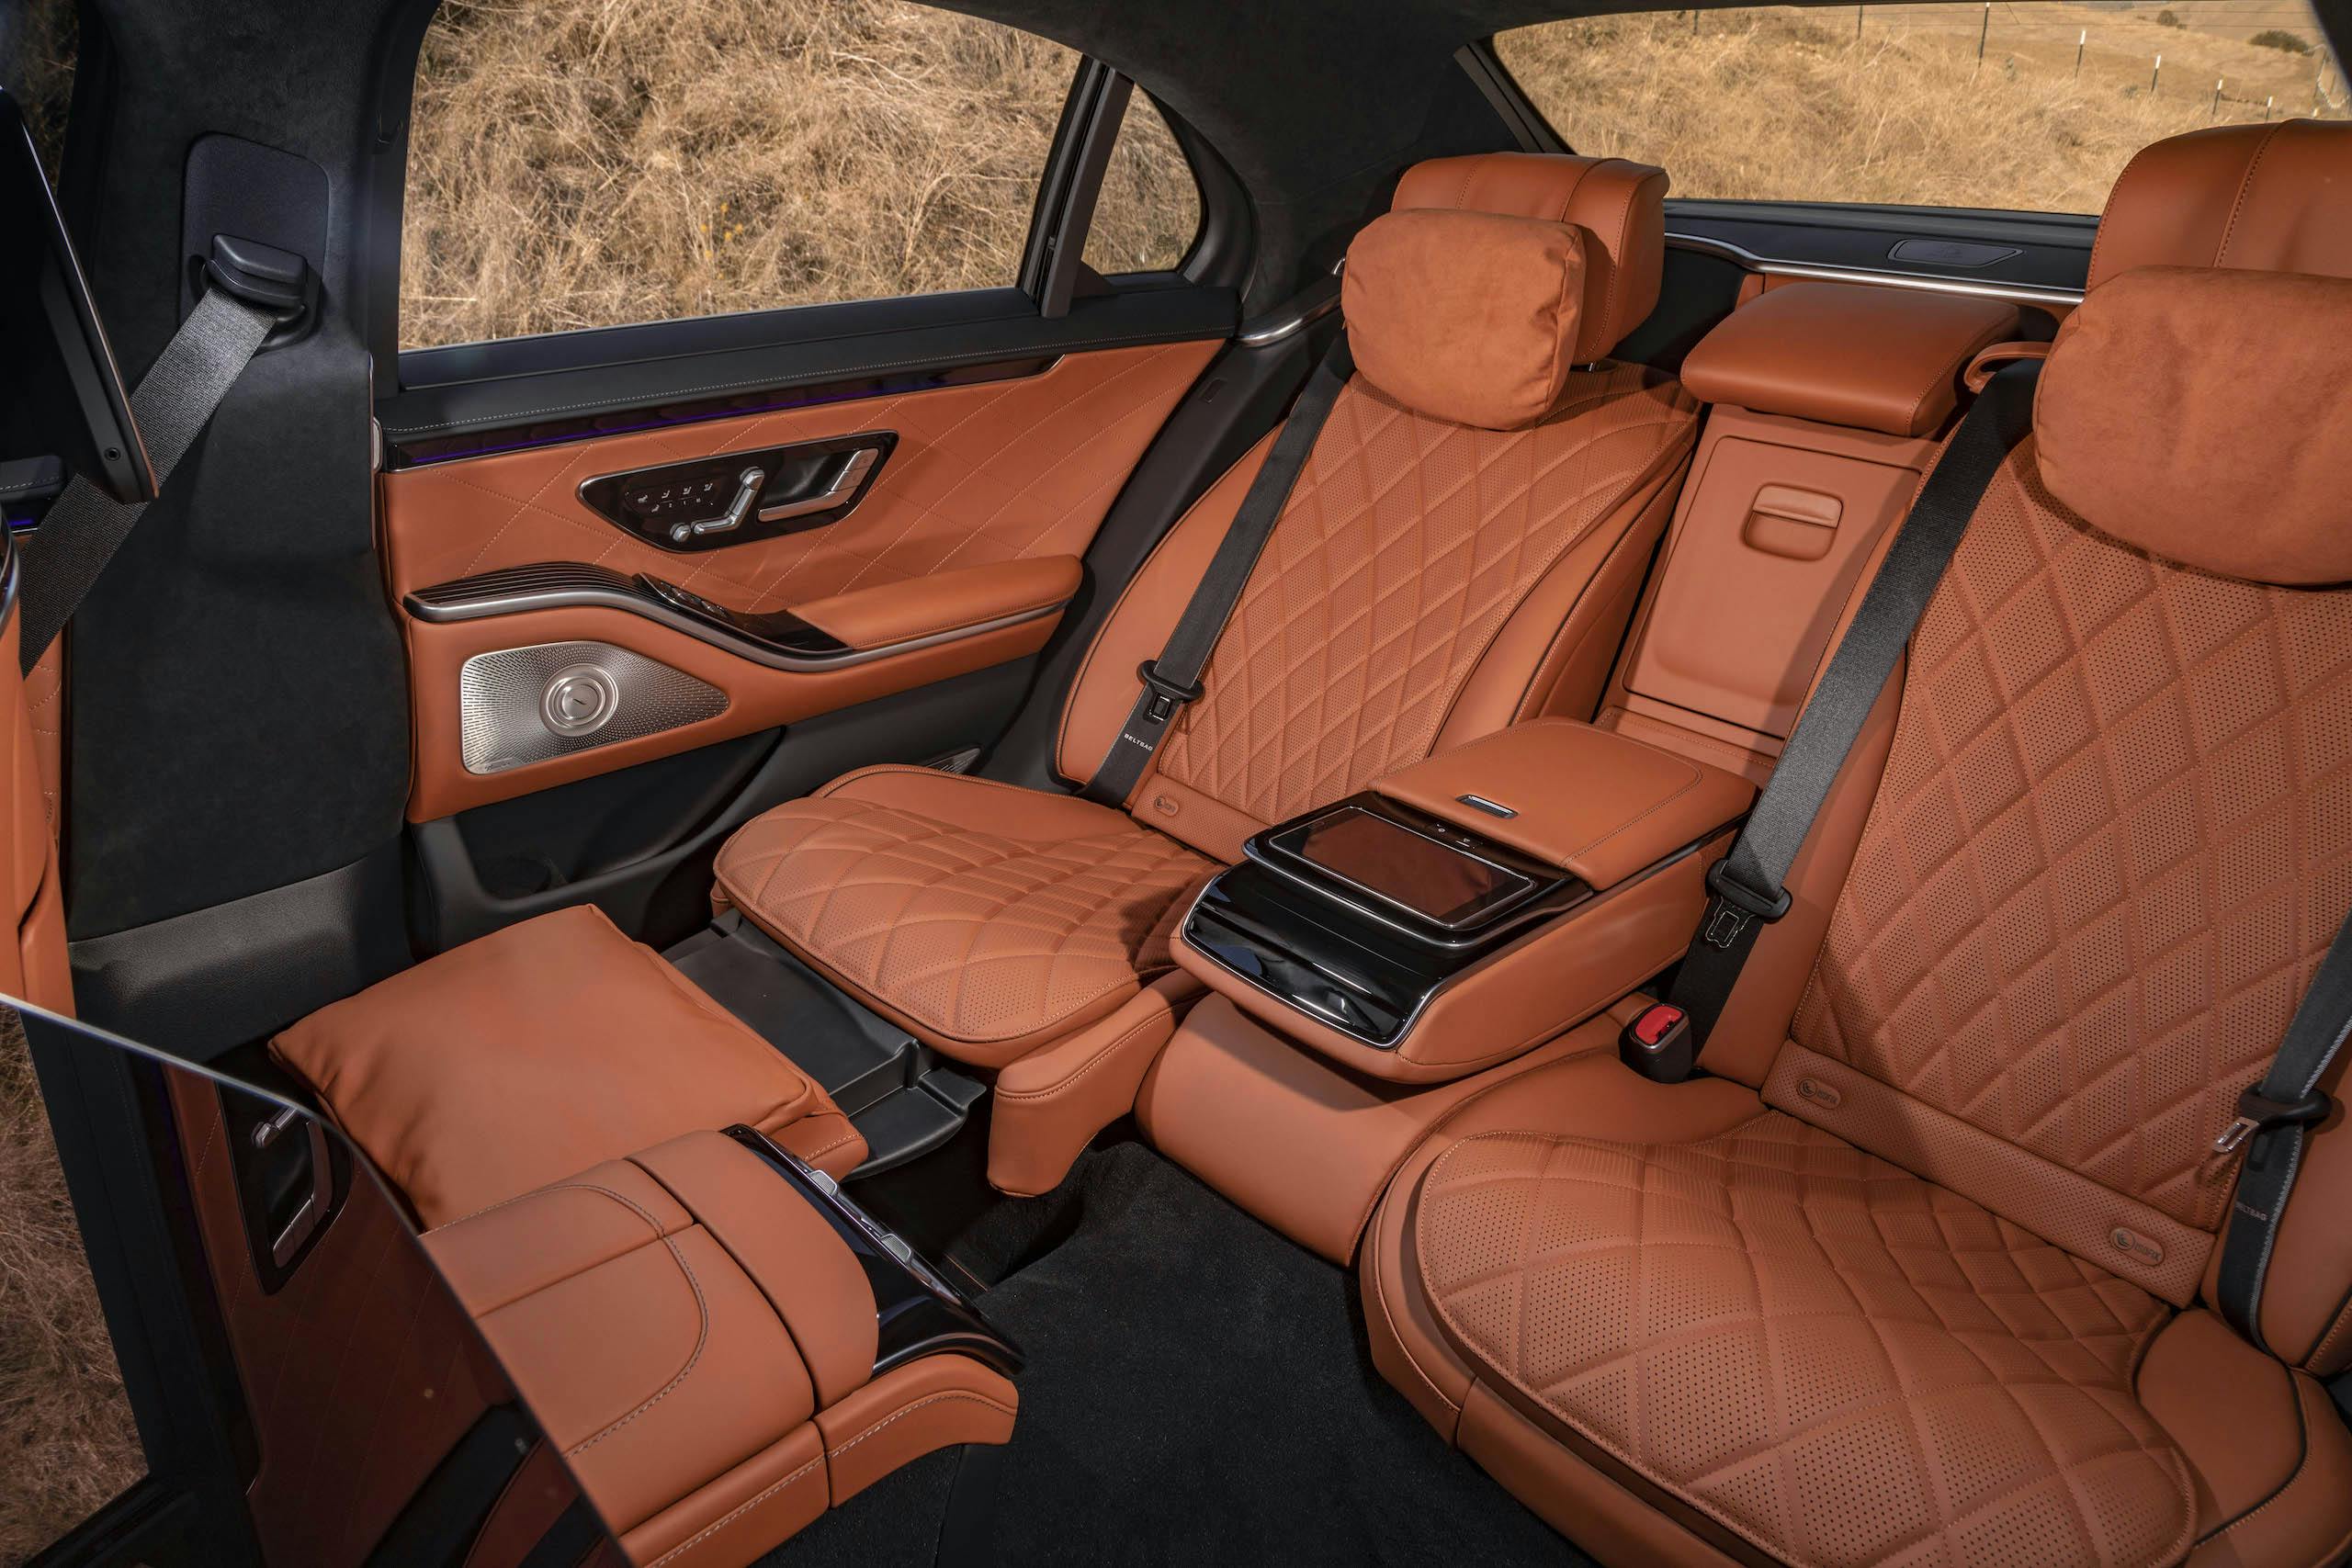 Mercedes Benz-S-Class interior rear seat